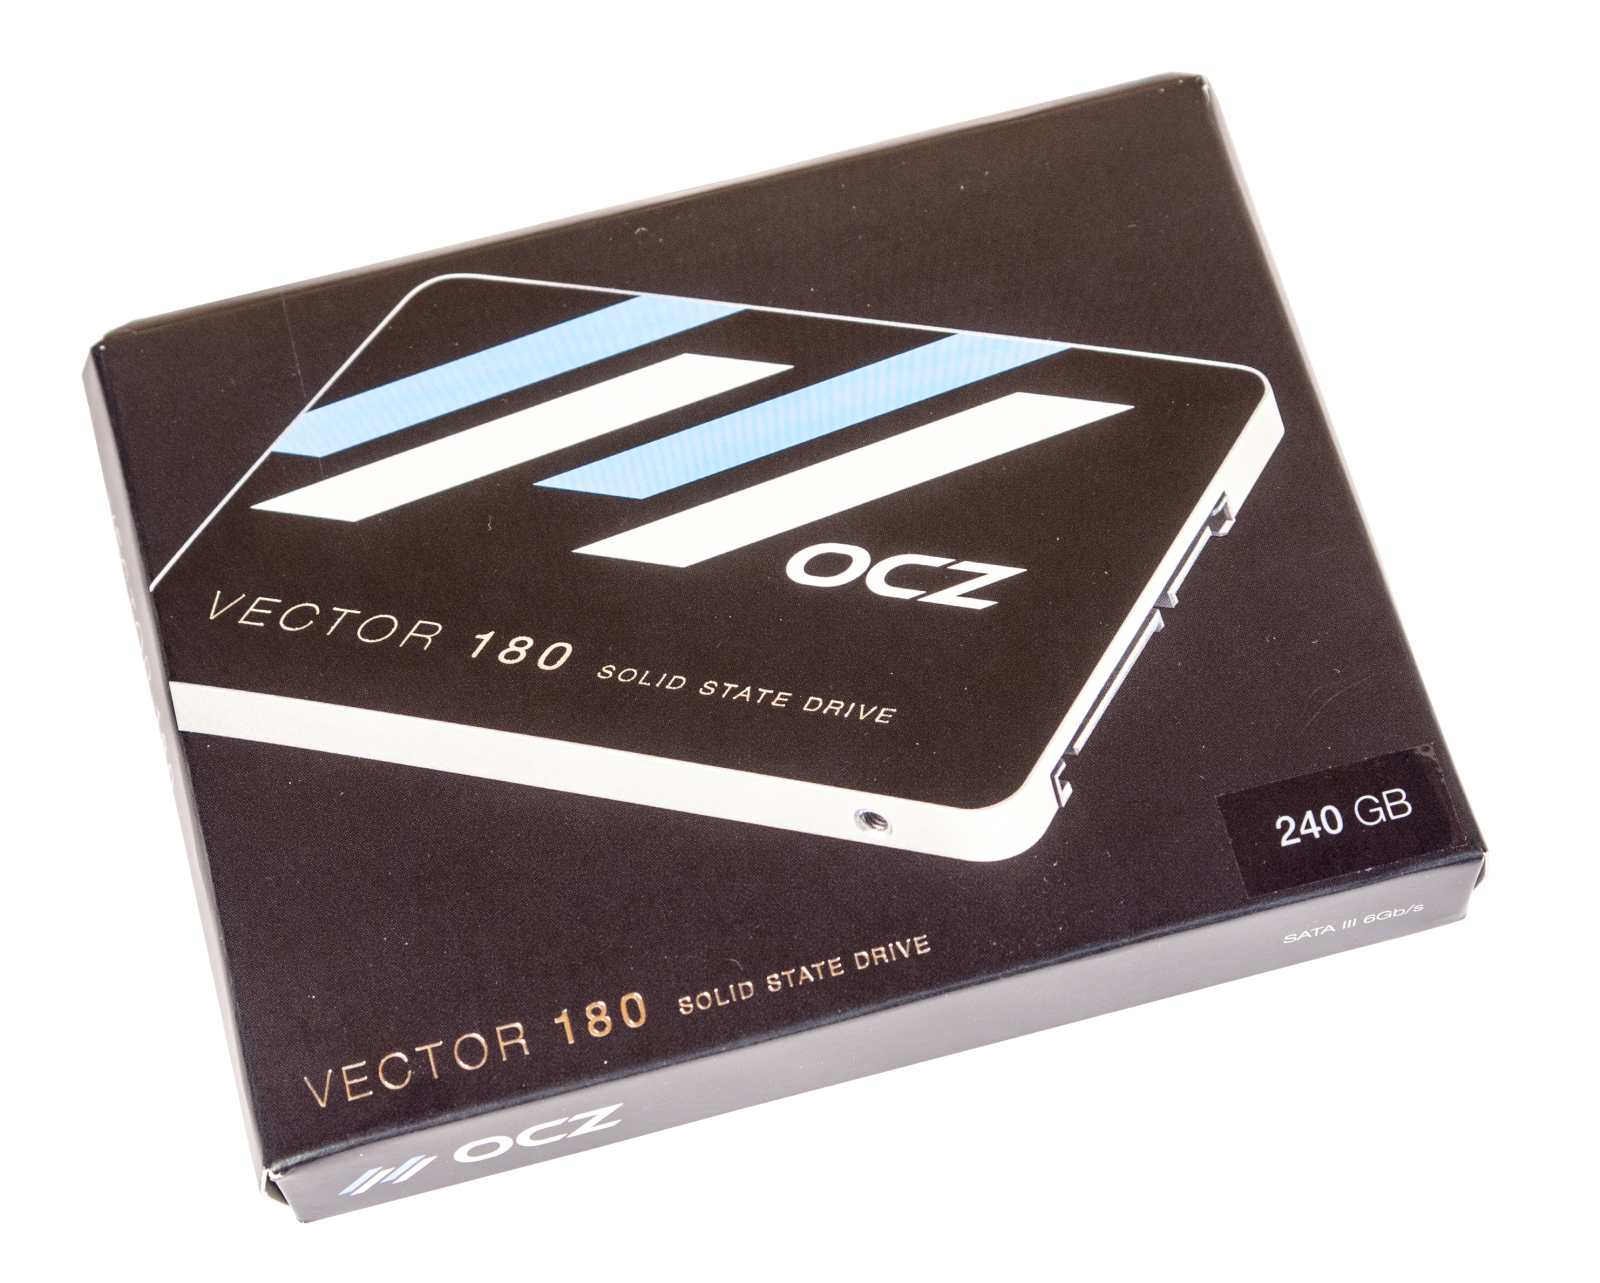 Vector 180 — новый SSD от OCZ